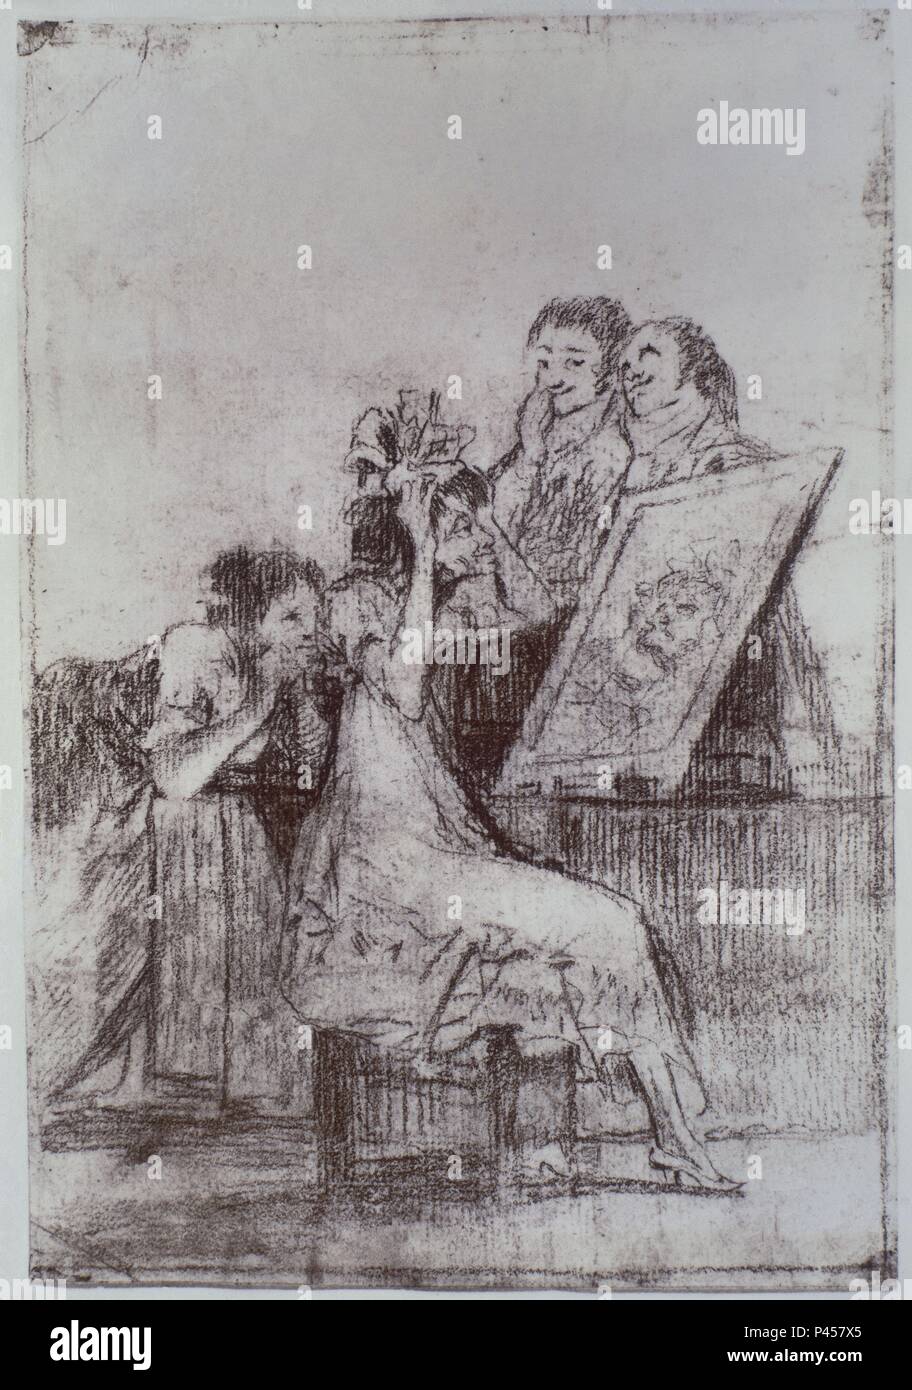 CAPRICHO - 55 Hasta la Muerte - SIGLO XVIII - DIBUJO PARA SANGUINA. Auteur : Francisco de Goya (1746-1828). Emplacement : Museo del Prado-DESSINS, MADRID, ESPAGNE. Banque D'Images